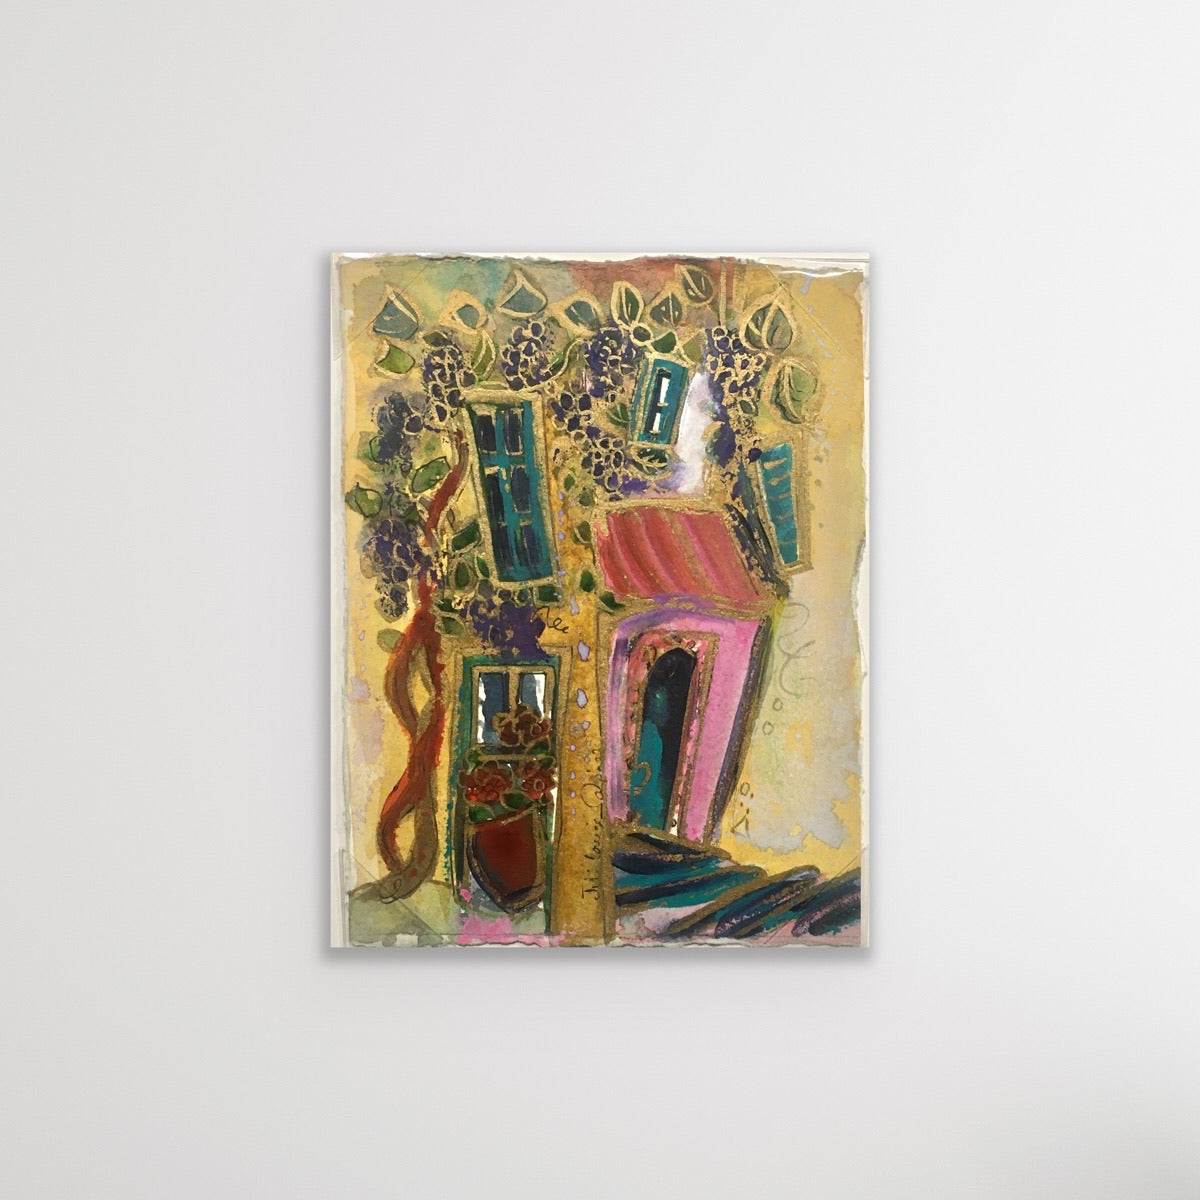 de Maison d’allee : Original Artwork  5.5”x7.5”